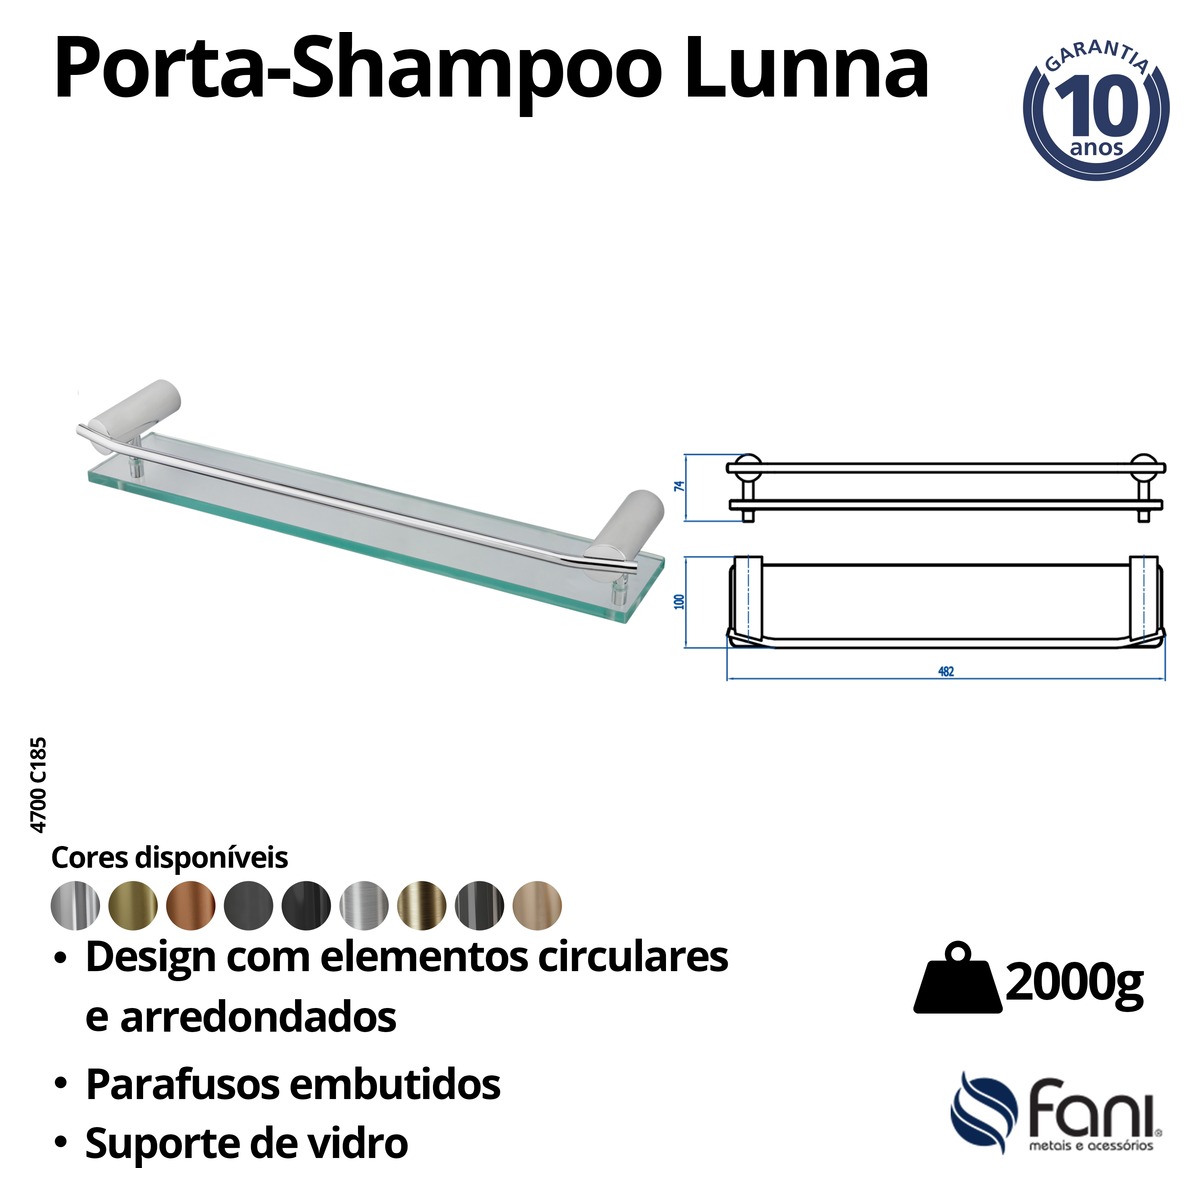 Porta Xampu Lunna 4700BK185 Preto Fosco Fani